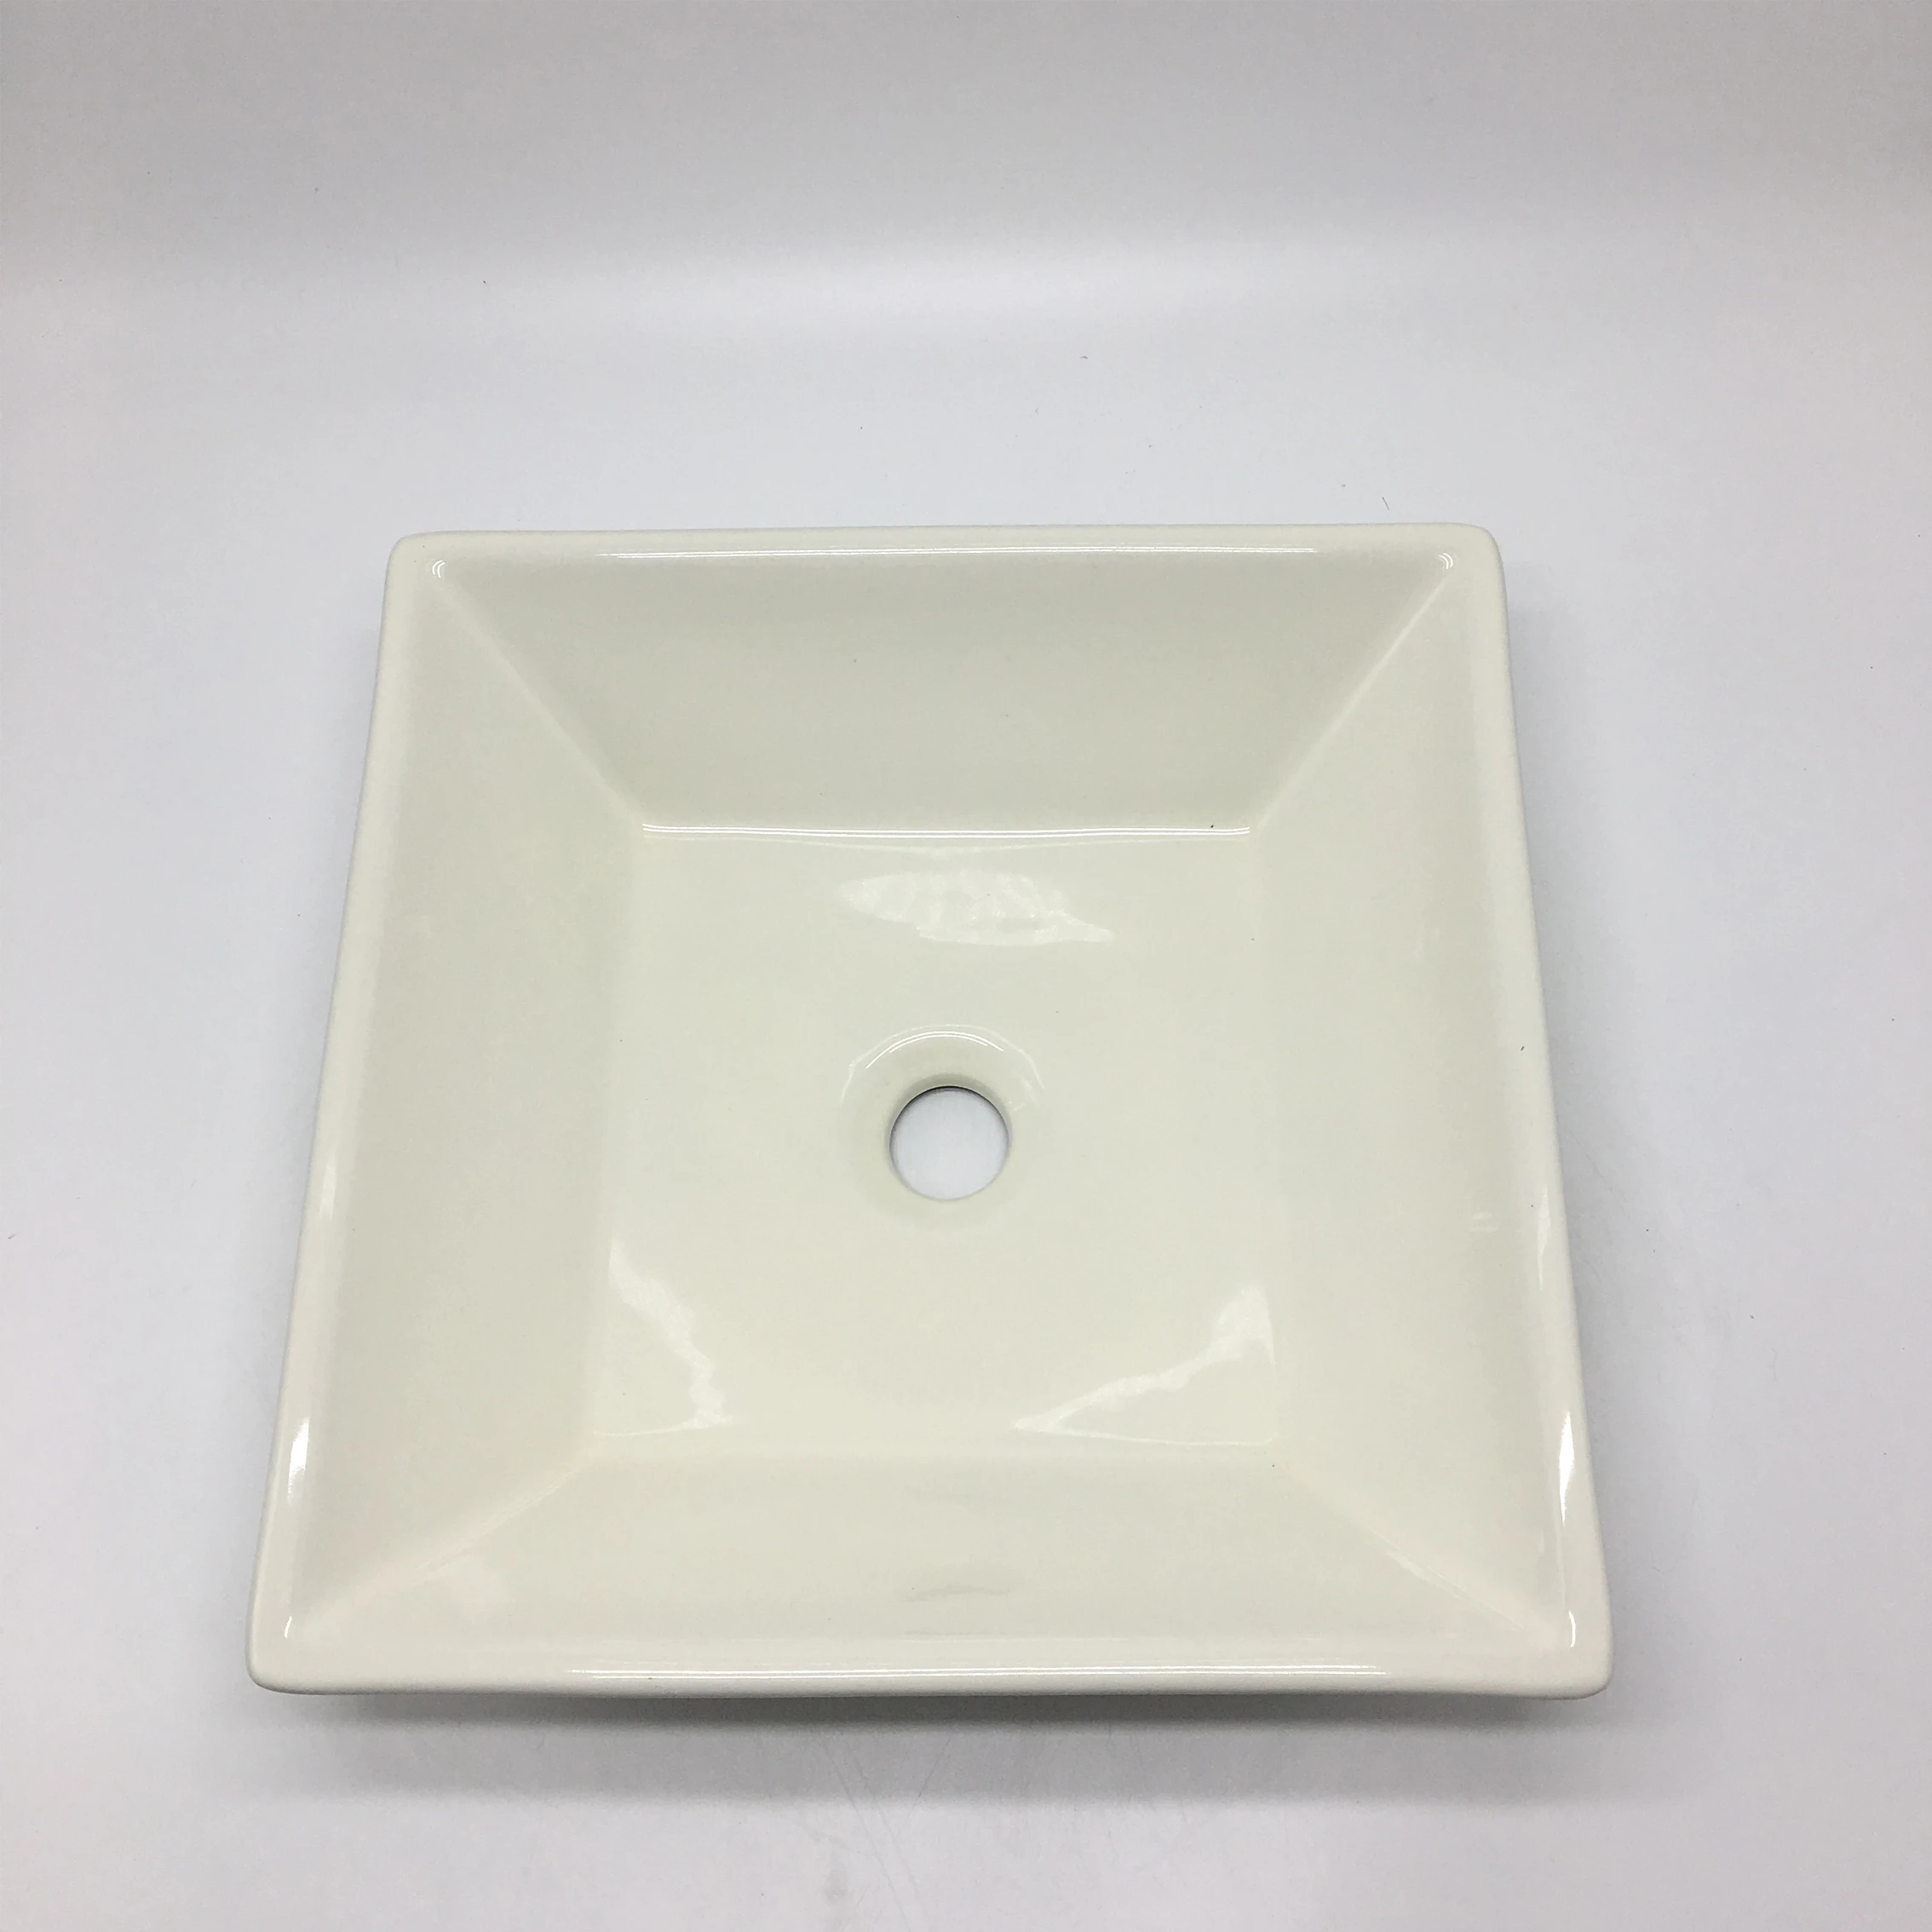 Manufacturer Supplier Art Basin Ceramic wash Basin Square Bathroom wash Basin